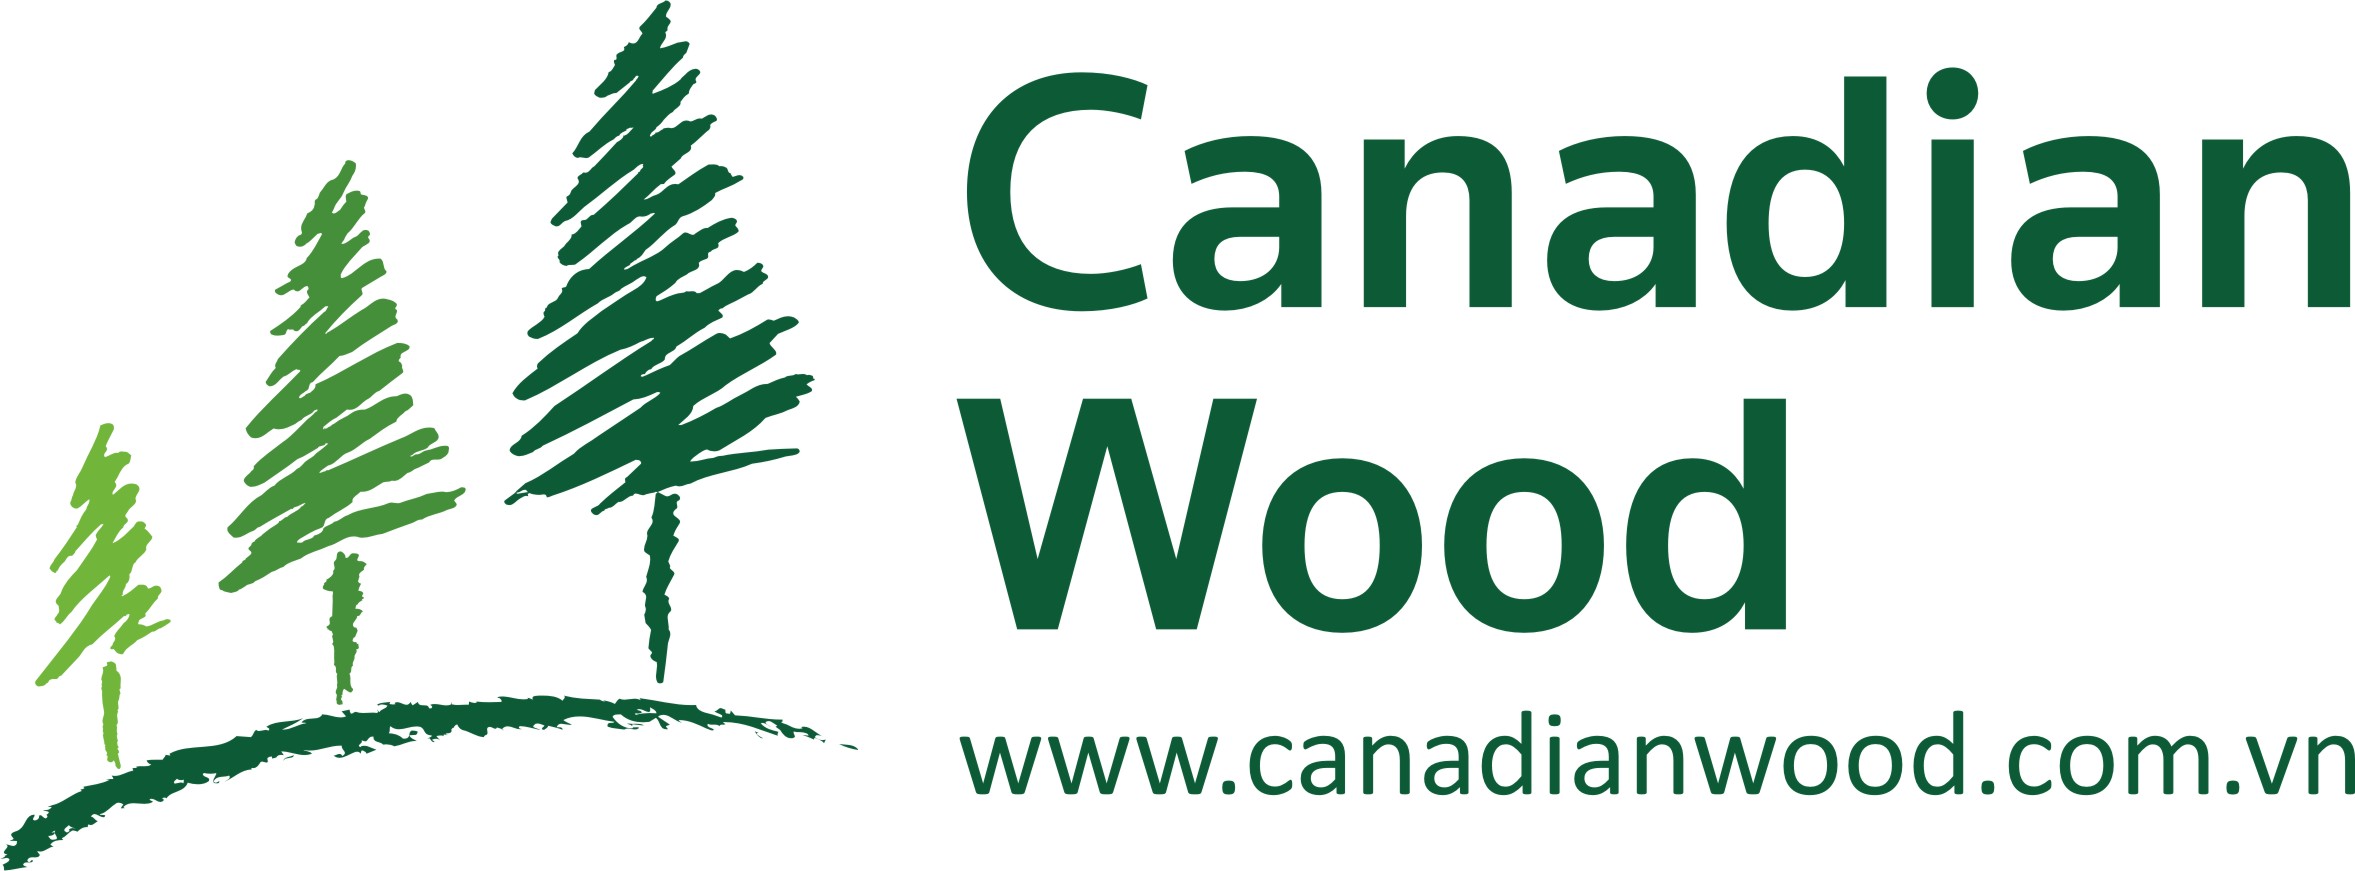 CANADIAN WOOD